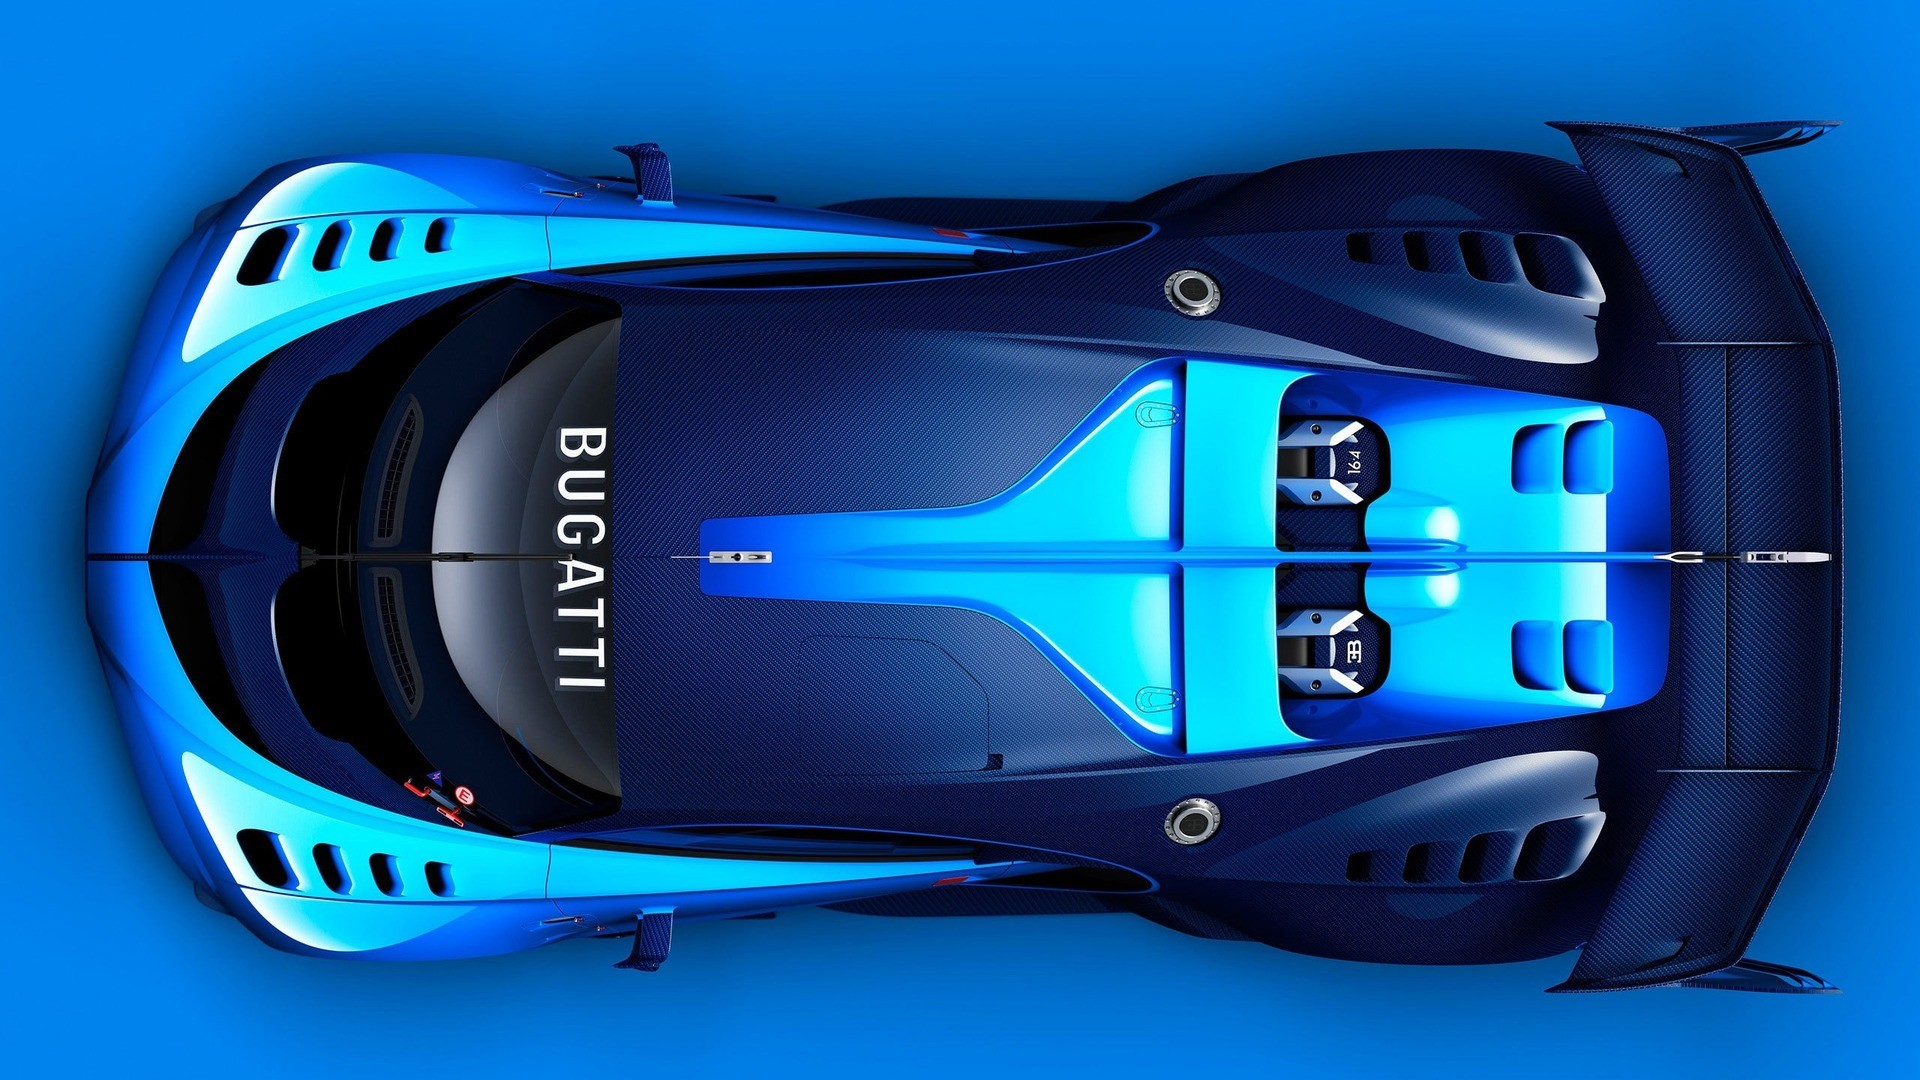 Car Sports Car Concept Cars Blue Bugatti Bugatti Vision Gran Turismo Blue Background High View Engin 1920x1080